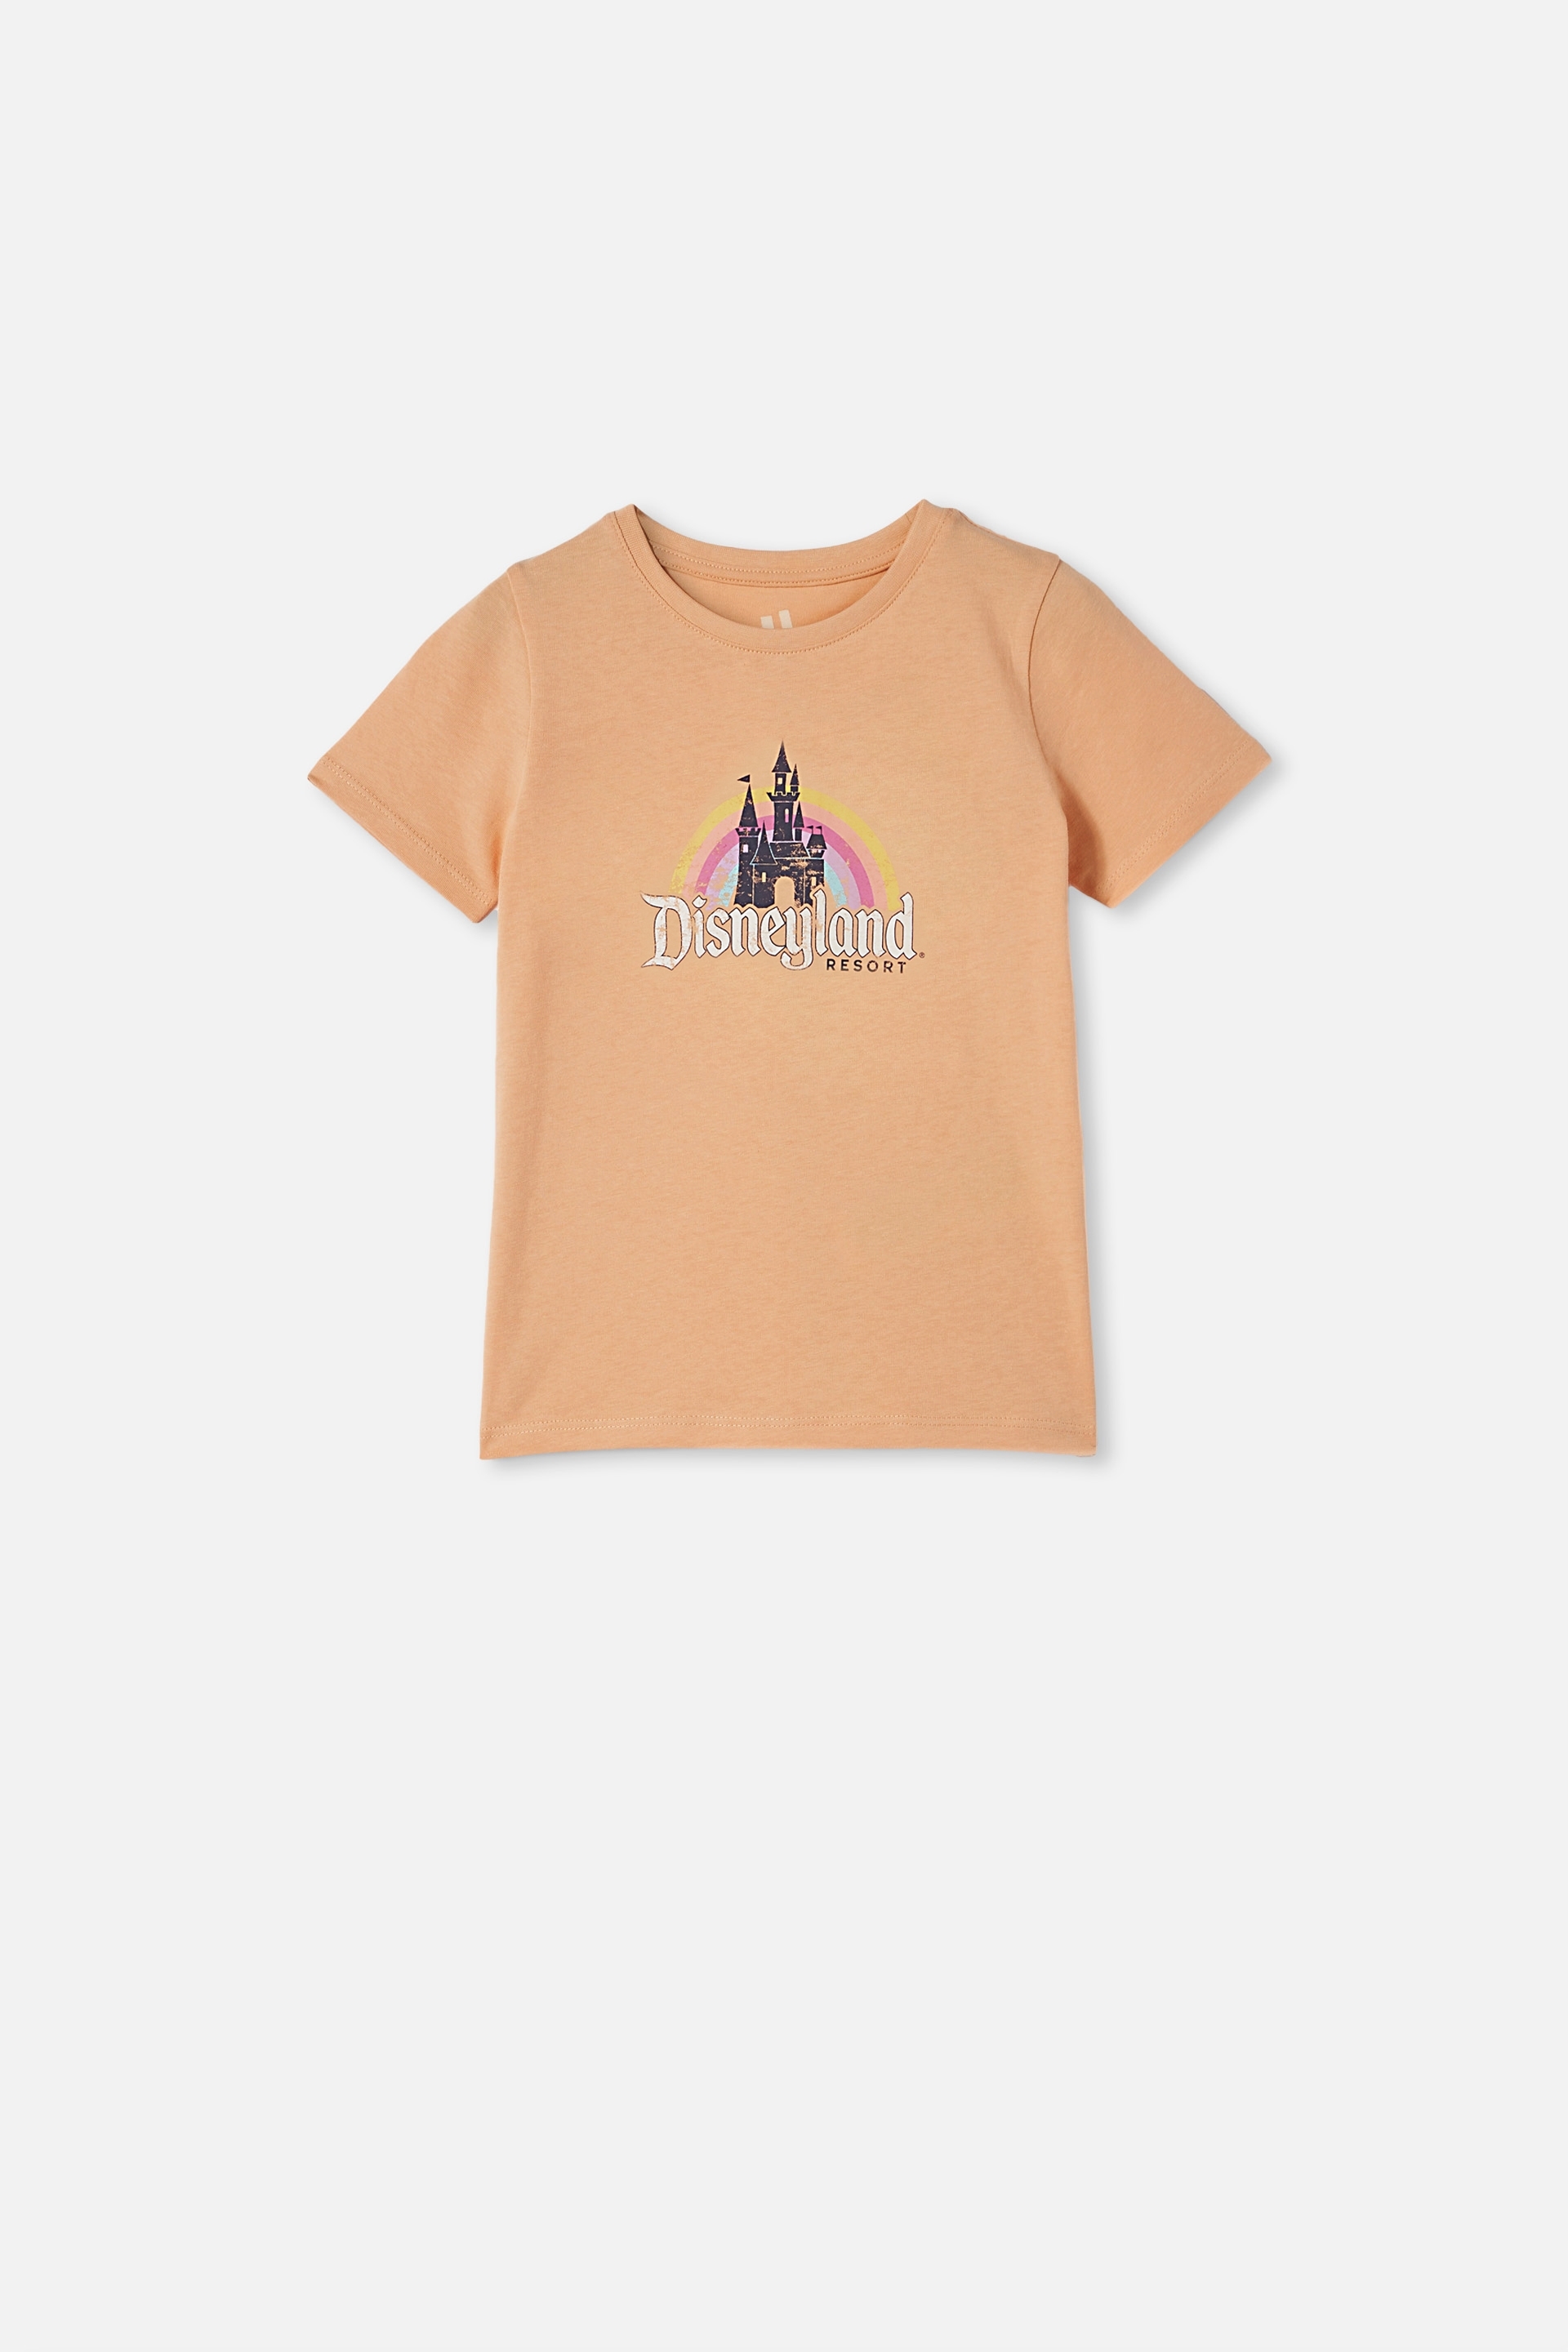 Cotton On Kids - Disneyland Short Sleeve Tee - Lcn dis rainbow castle/peachy